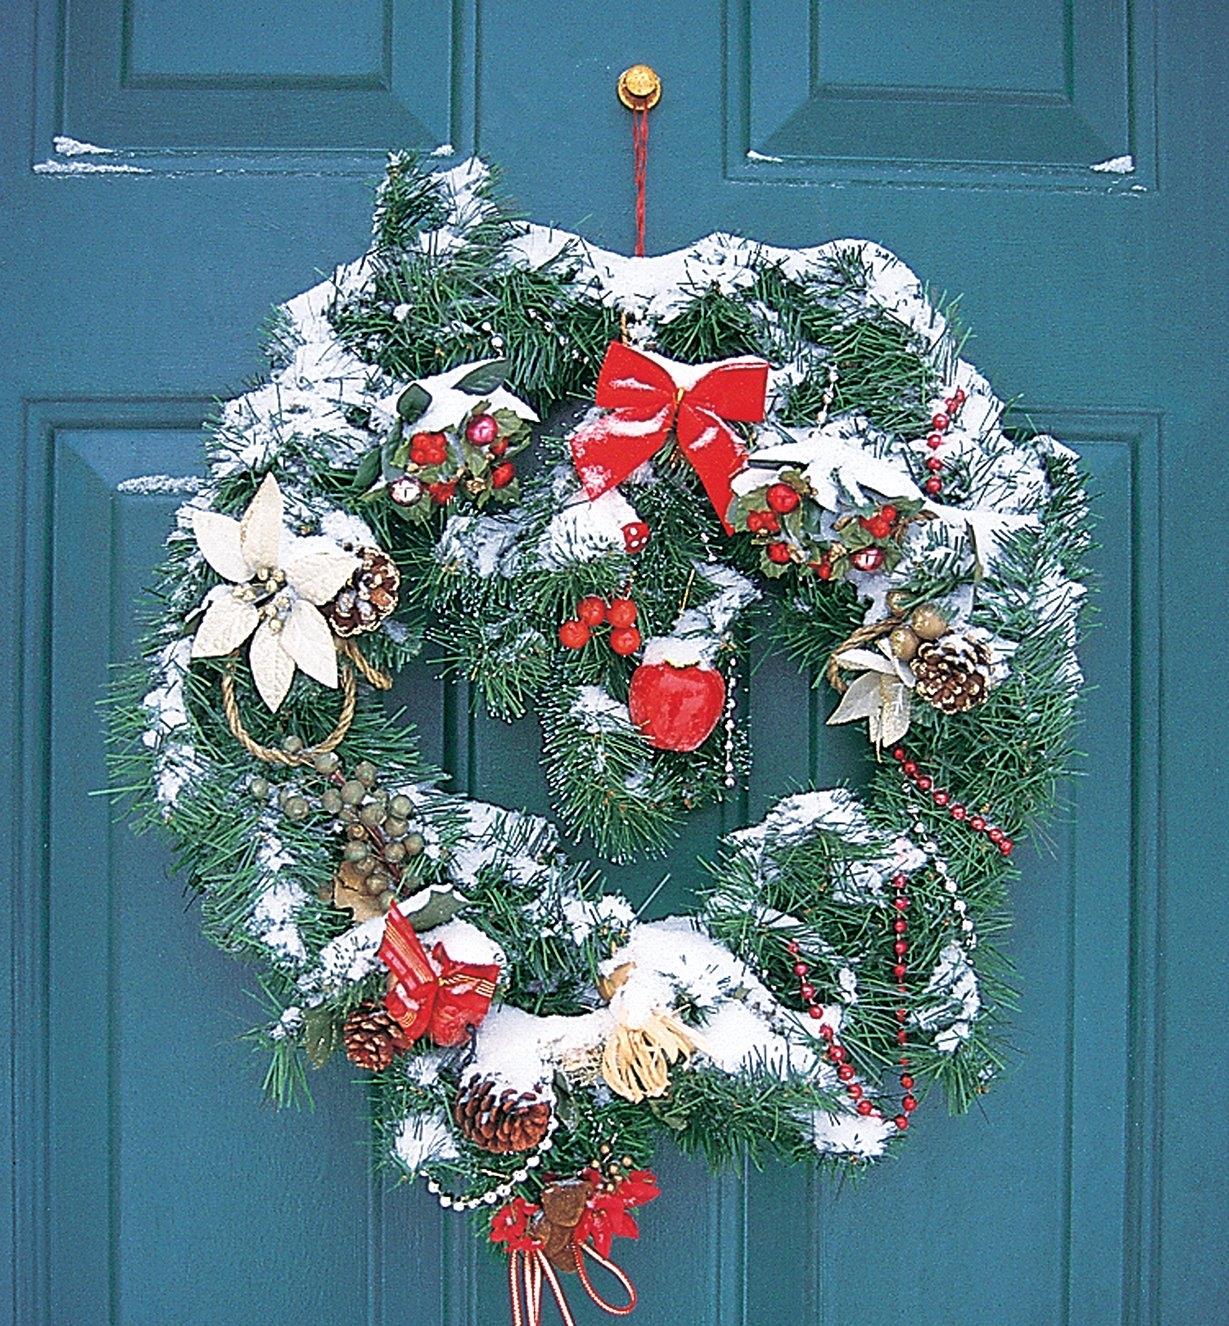 A Hanger Knob holding a Christmas wreath on an exterior door